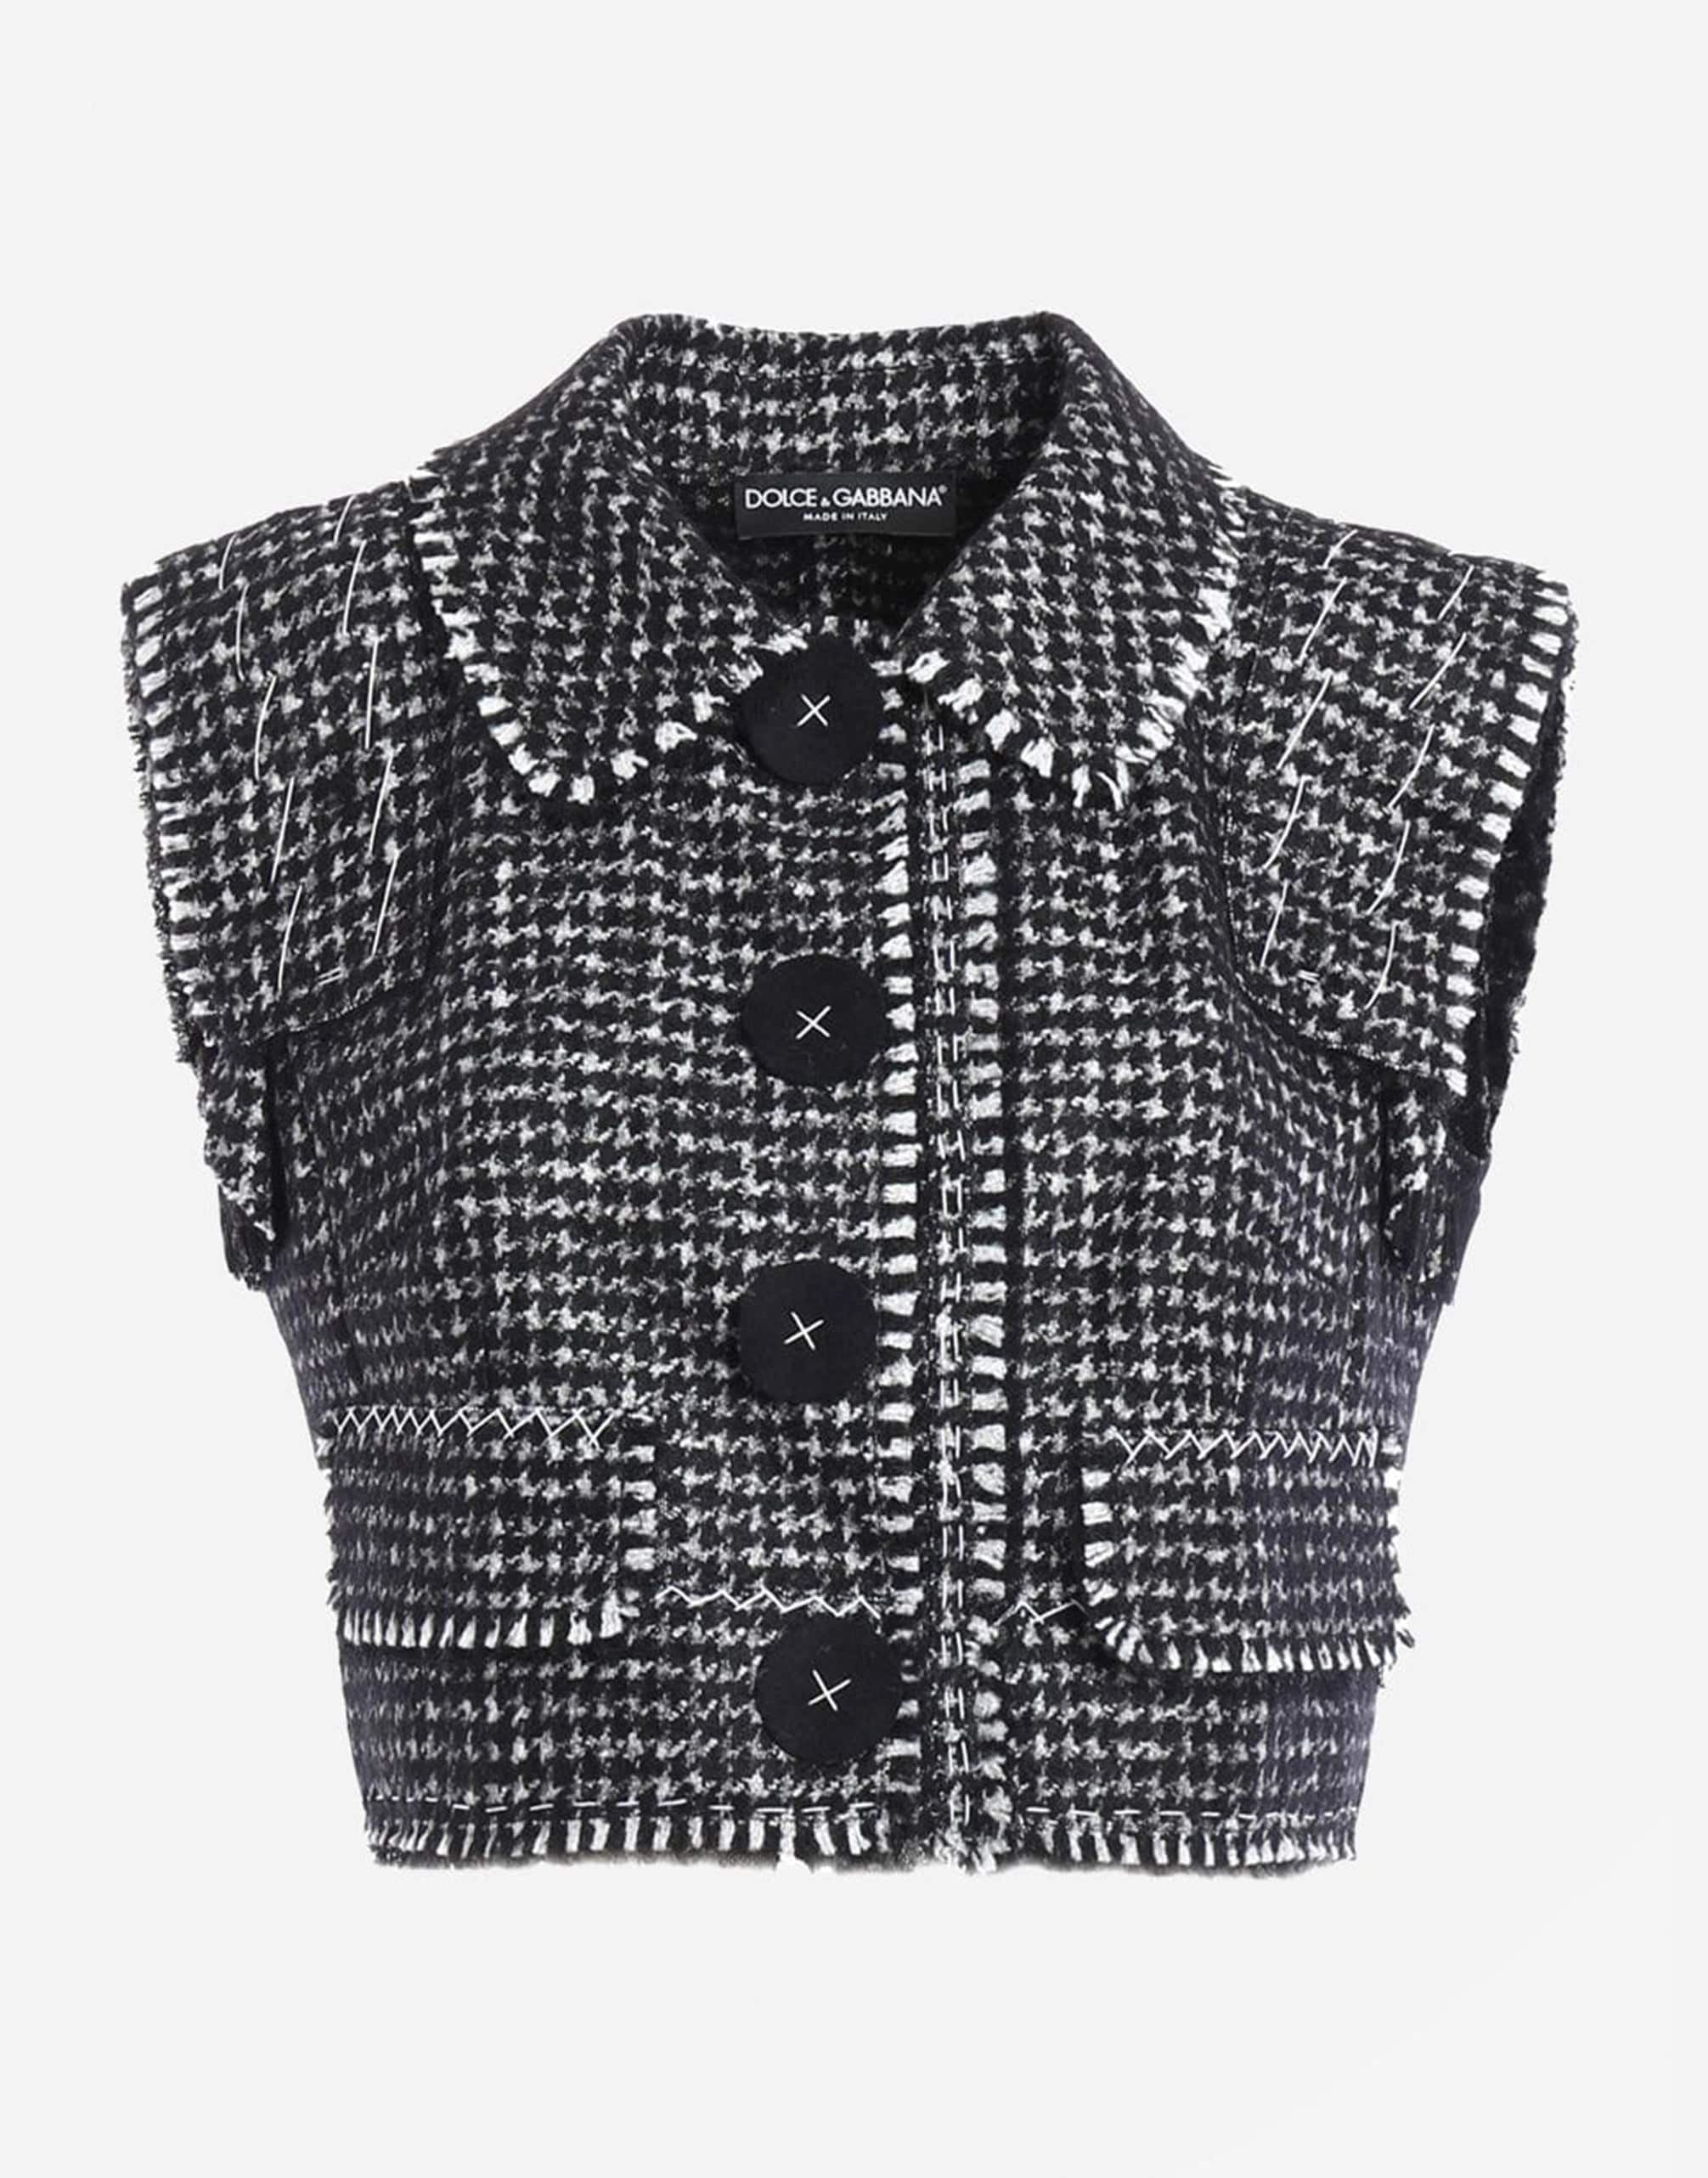 Dolce & Gabbana Wool Blend Sleeveless Jacket